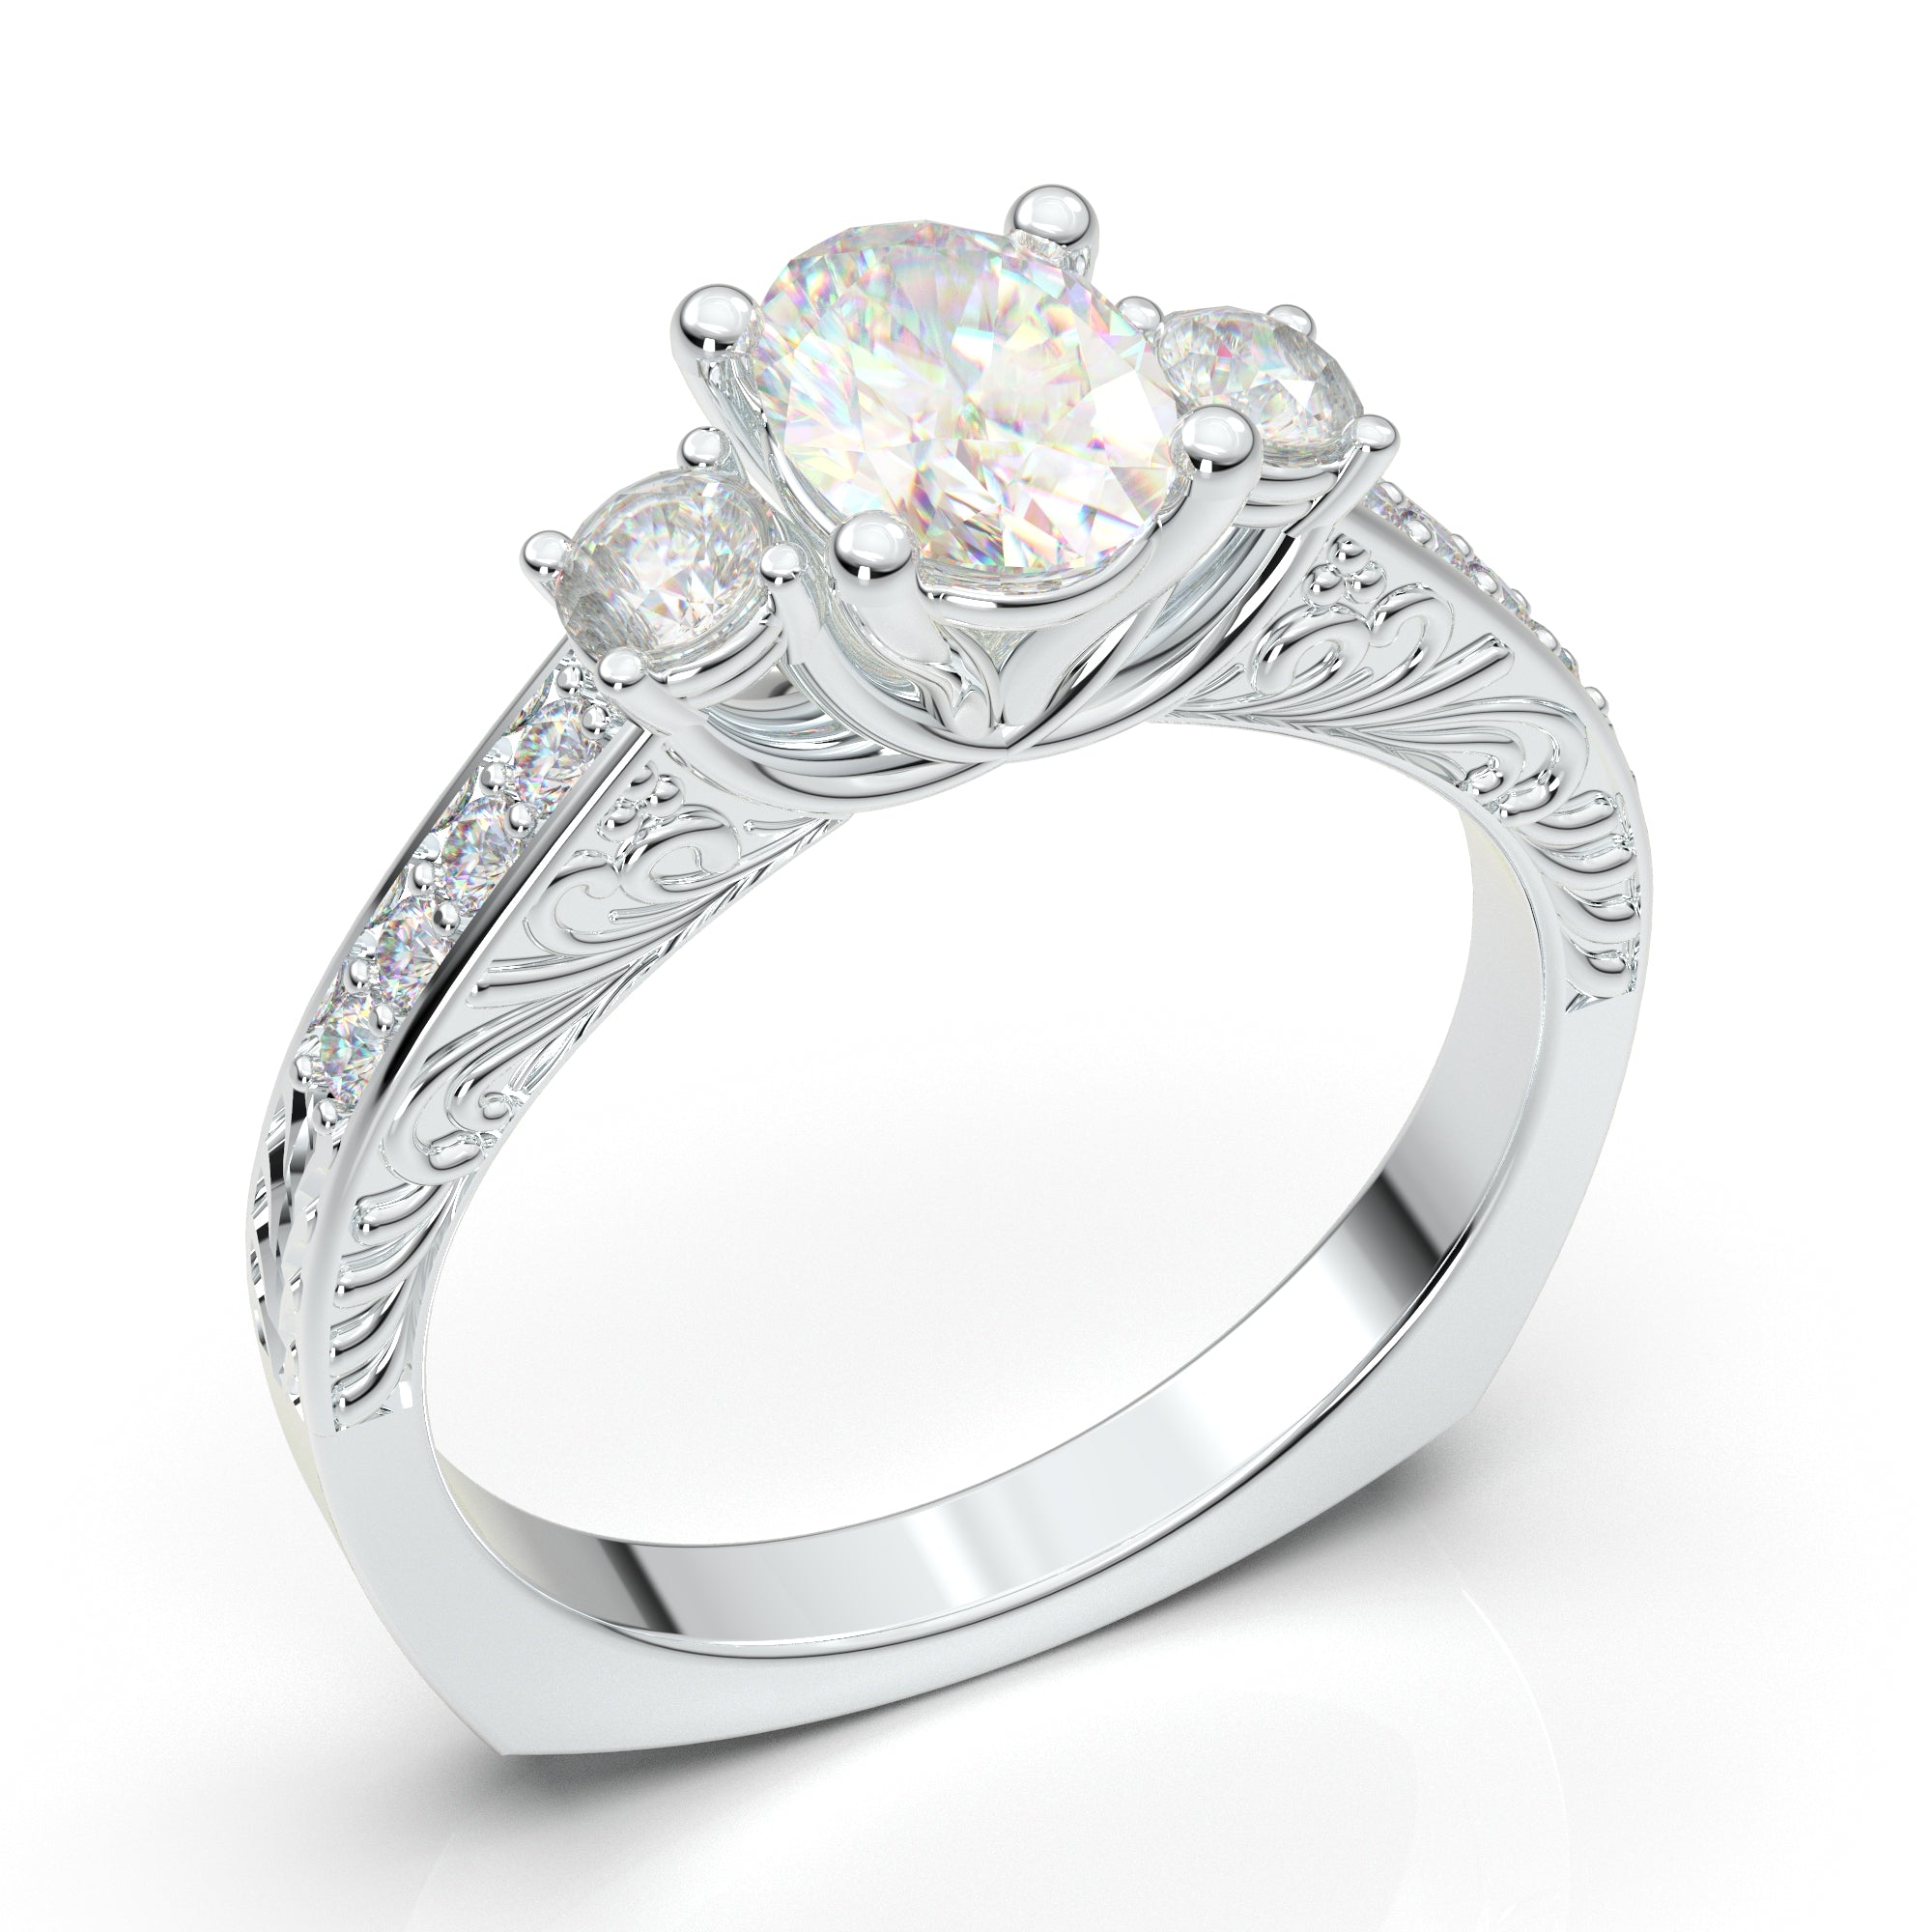 Buy Sterling Silver Gemstone Ring Single Stone Ring Personalized Stone Ring  Custom Birthstone Ring Birthday Gift Bridesmaid Gift Online in India - Etsy